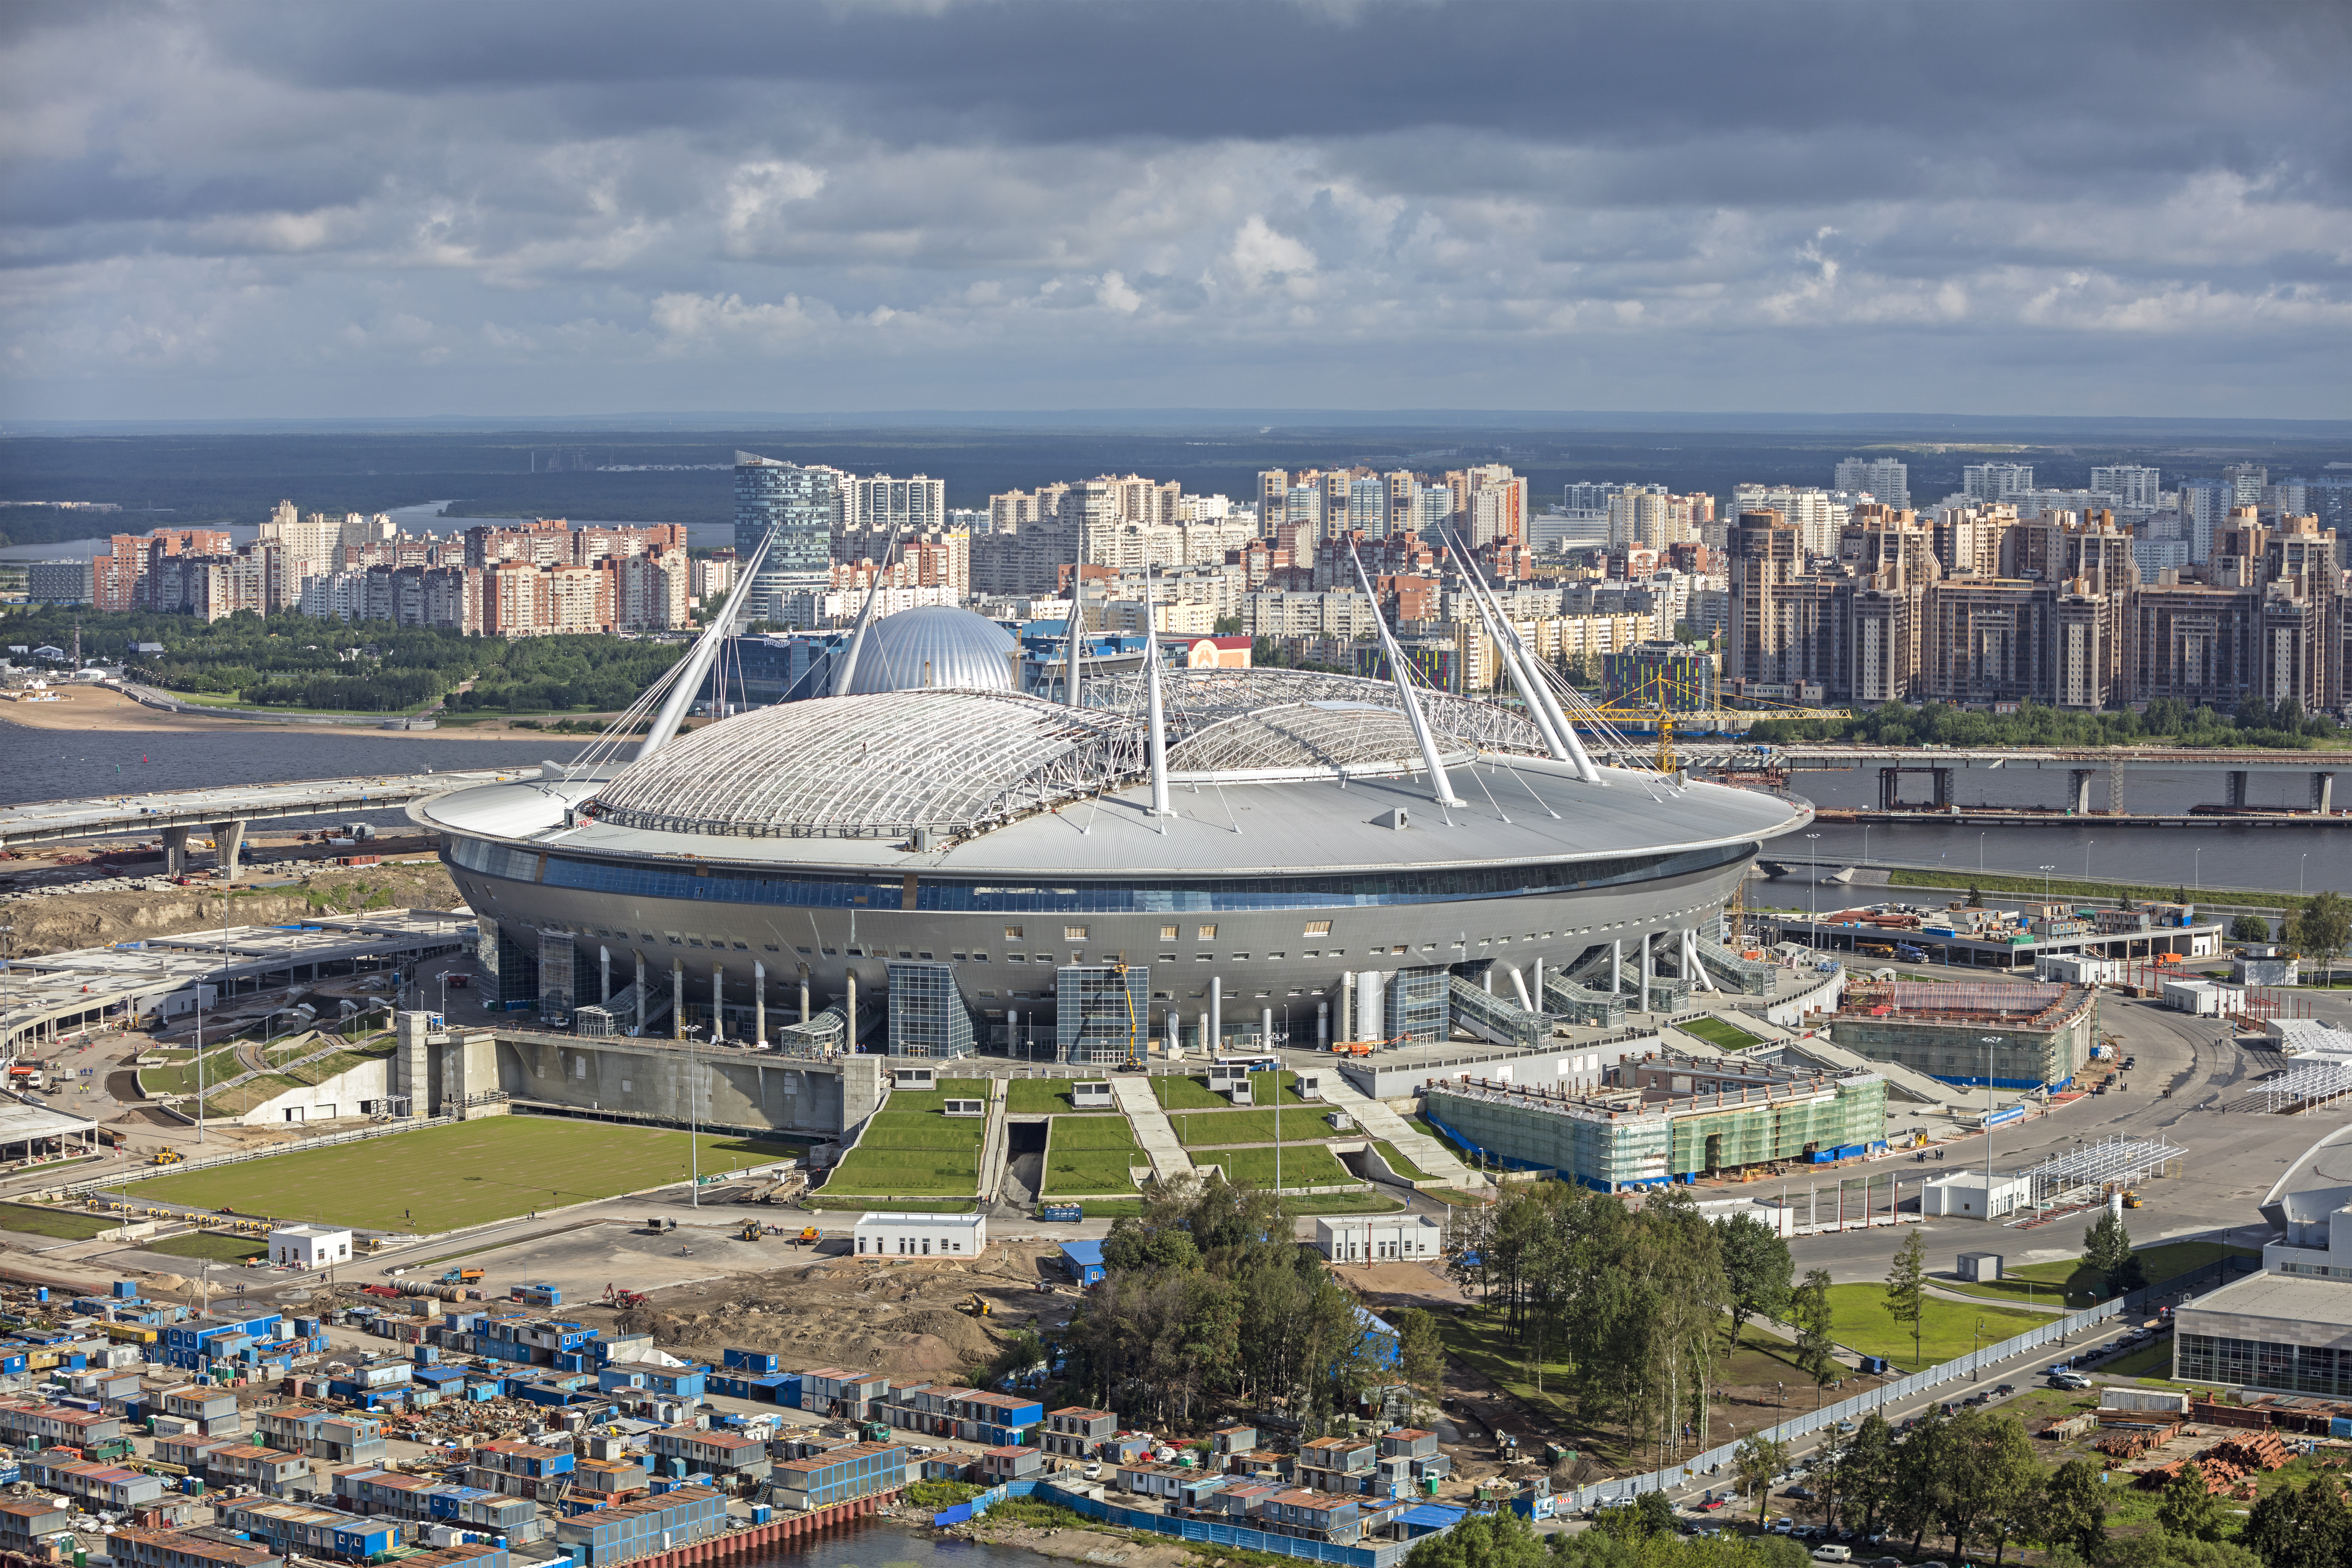 Wikipedia:Featured picture candidates/Krestovsky Stadium, Saint ...